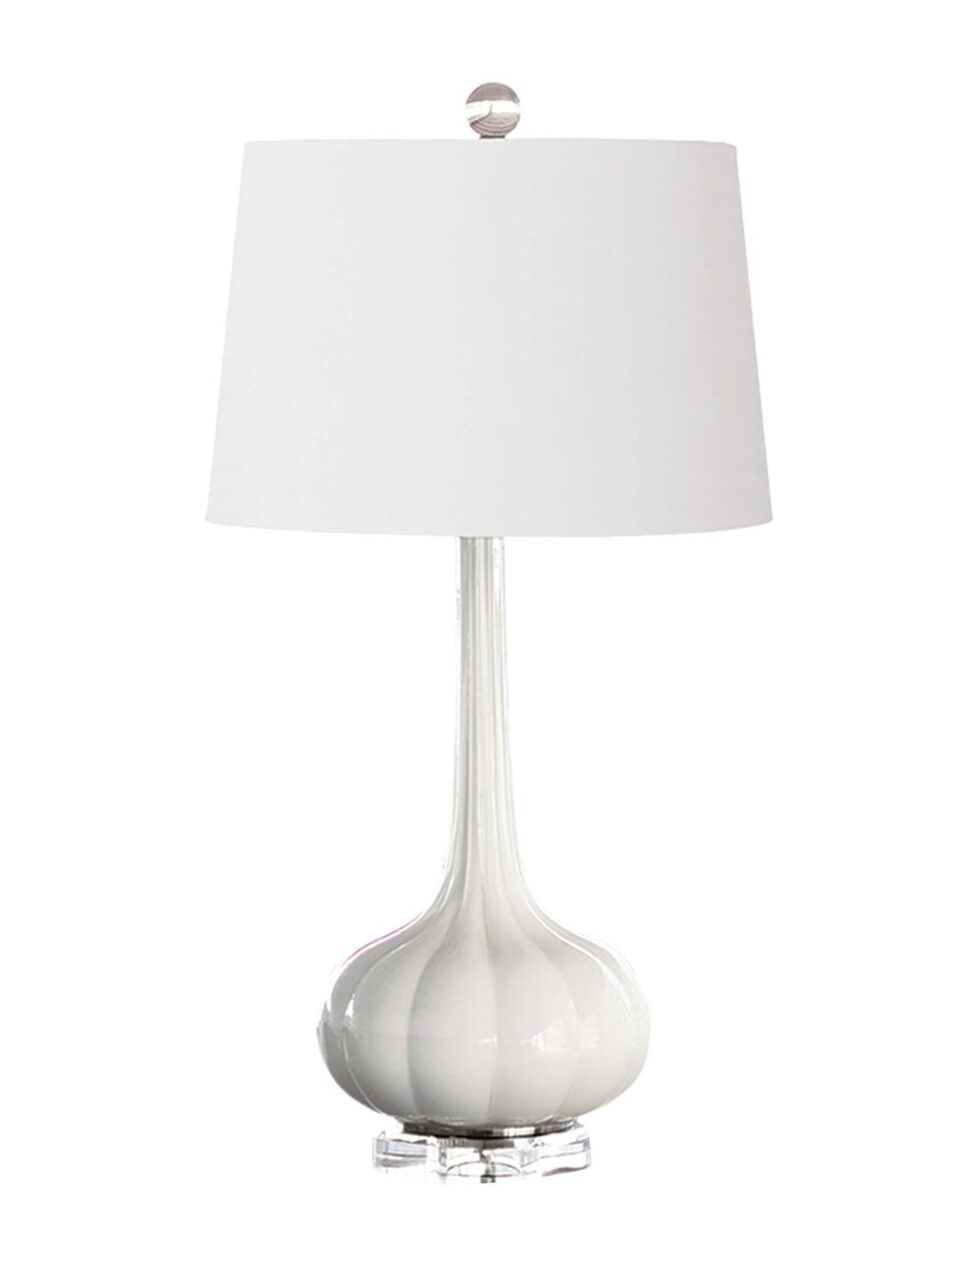 Стеклянная настольная белая лампа в форме амфоры "Спайк" (на белом фоне)